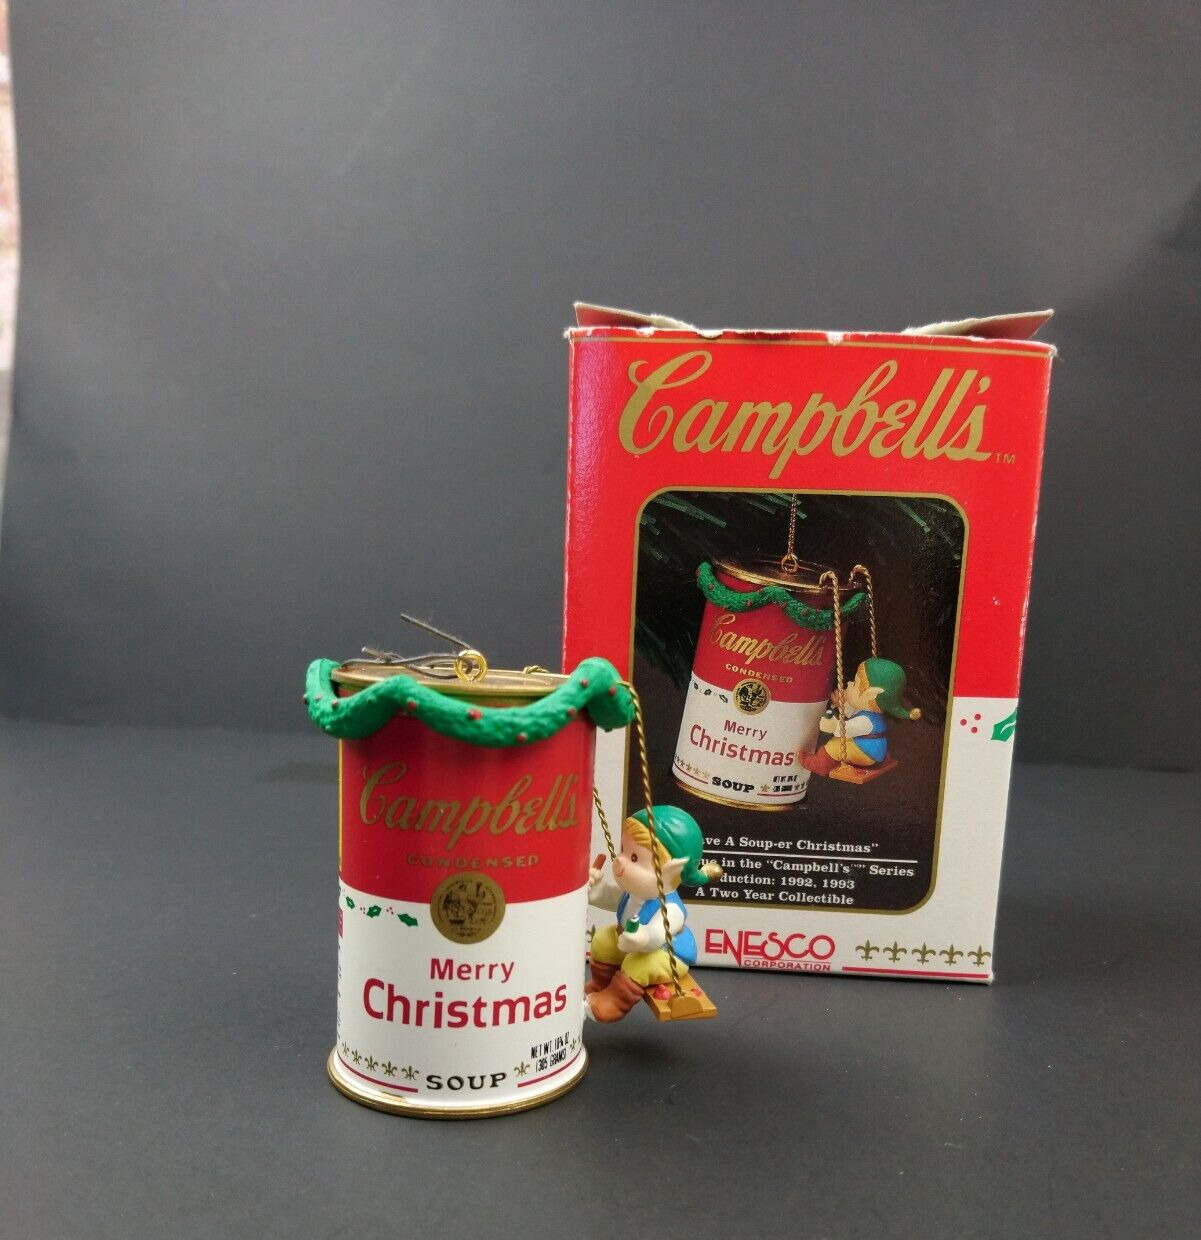 VTG 1992 Enecso Campbell's Soup Christmas Ornament Have A Soup-er Christmas